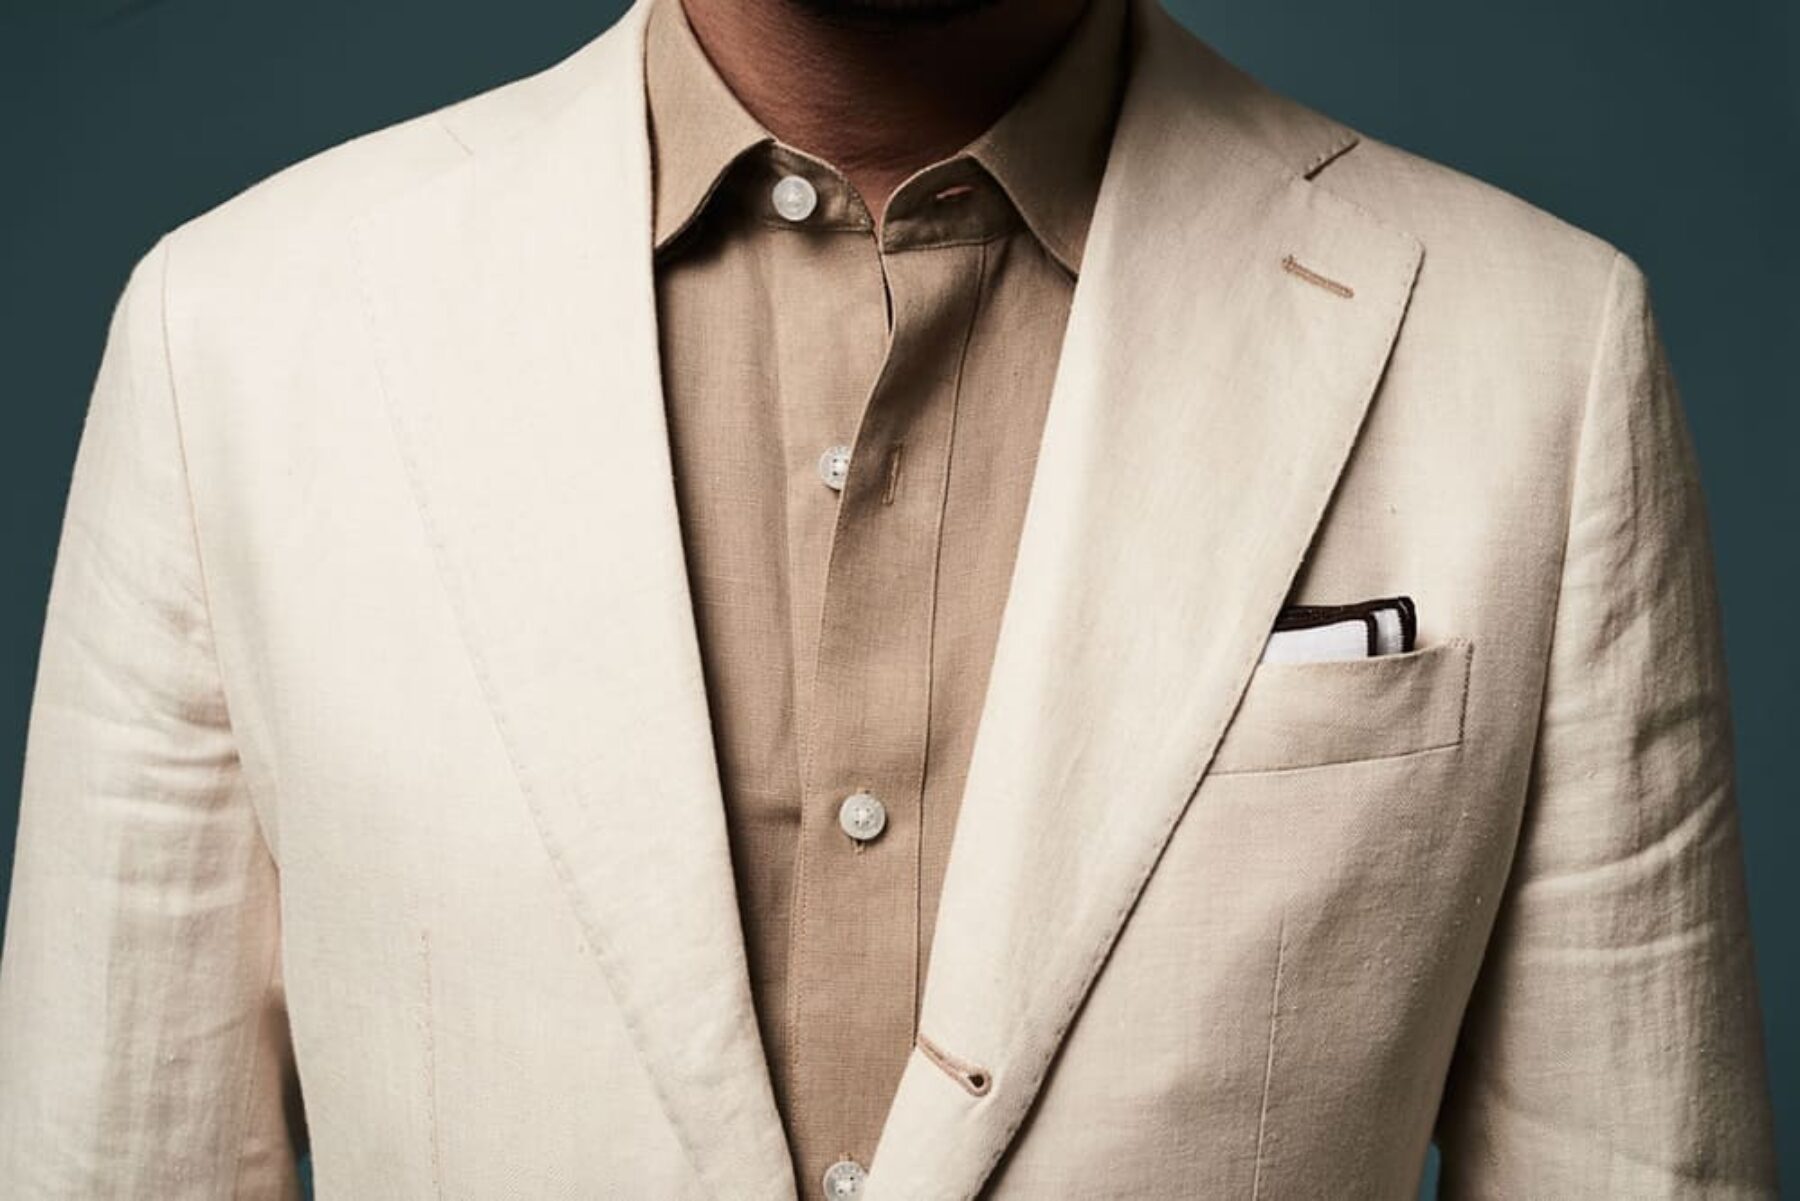 tan shirt and linen blazer by Oscar Hunt Tailors